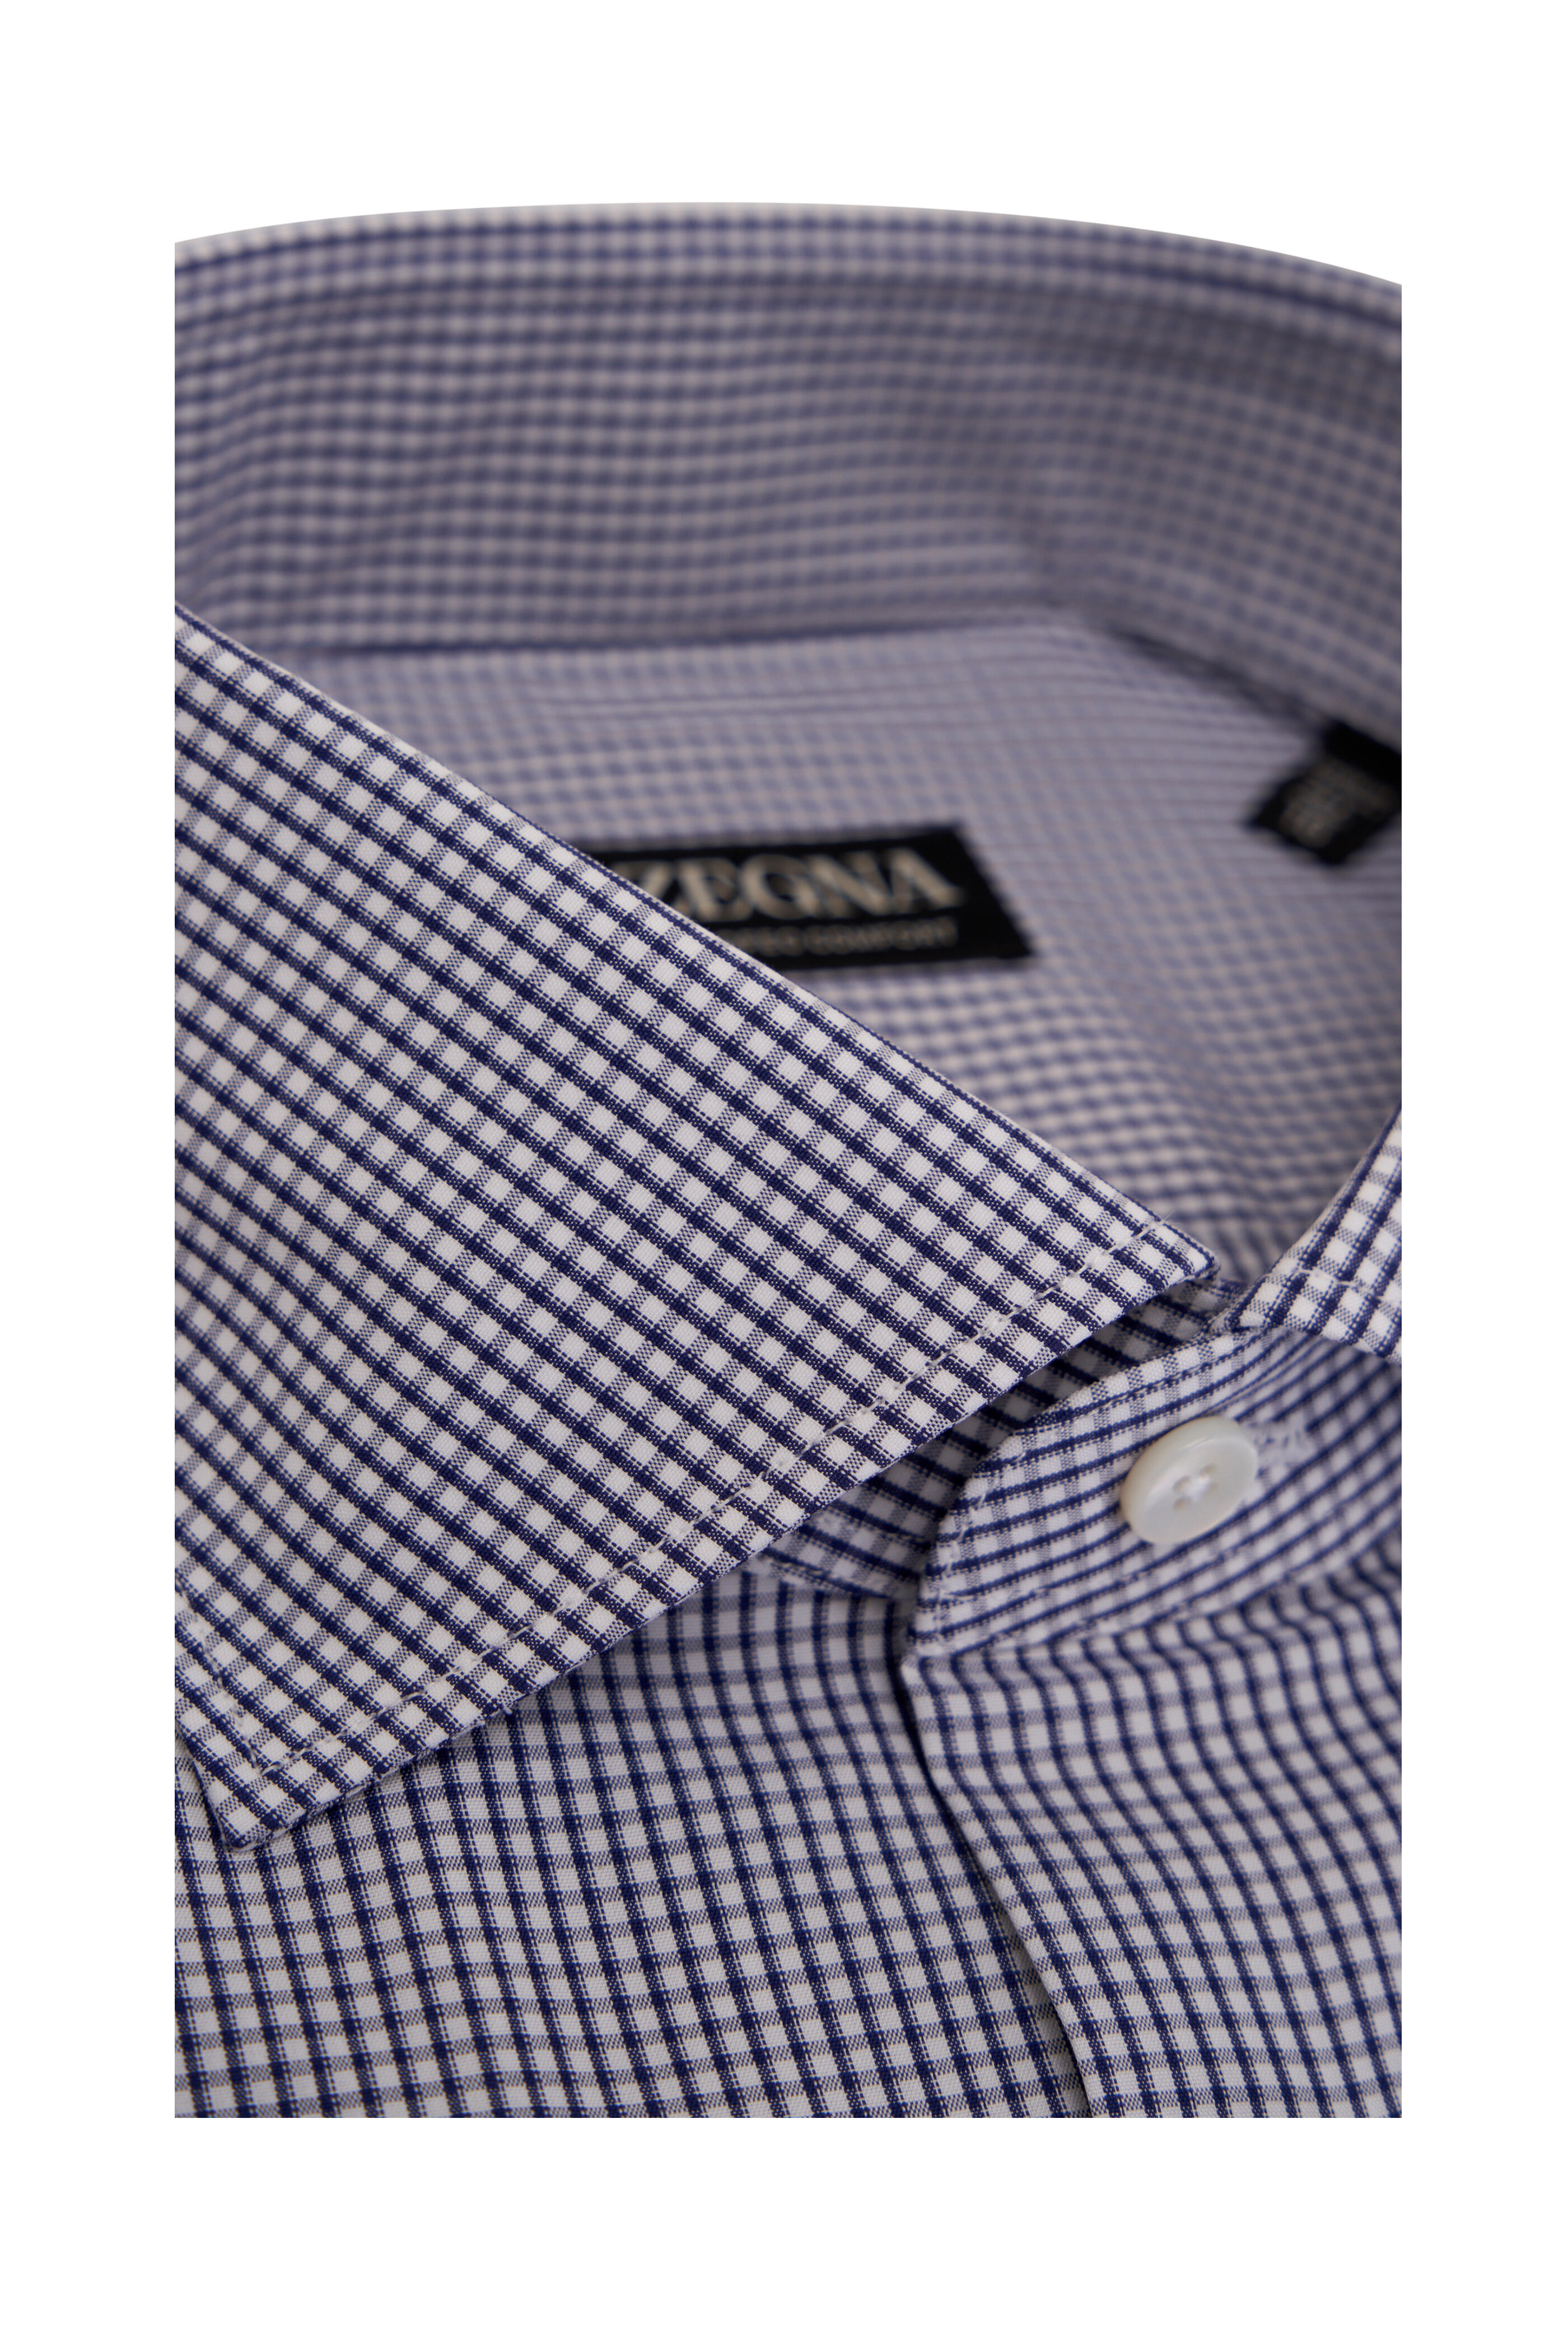 Zegna - Navy Check Cotton Dress Shirt | Mitchell Stores